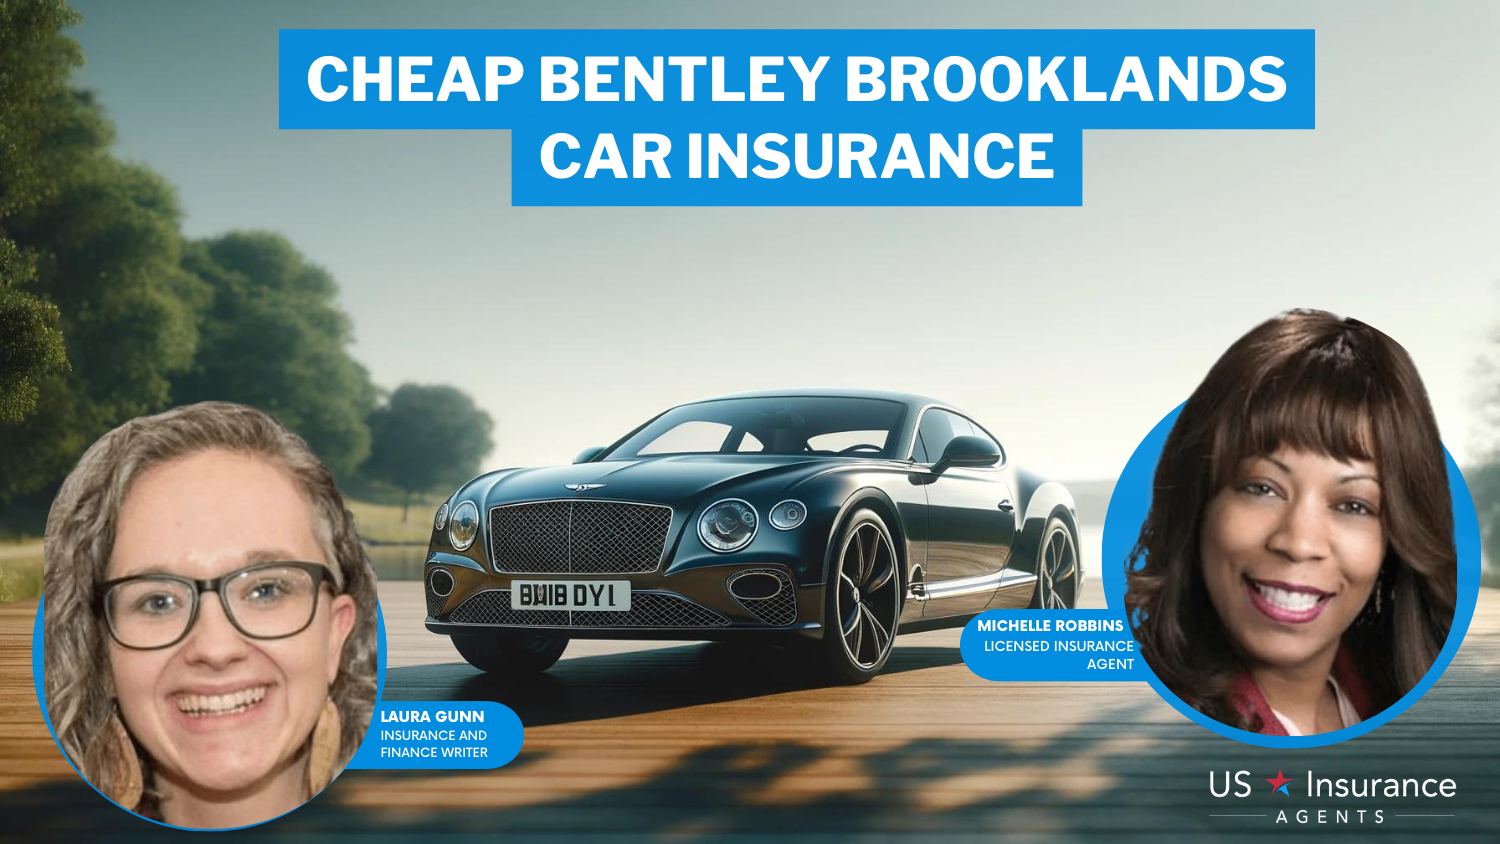 Cheap Bentley Brooklands Car Insurance: State Farm, USAA, and Progressive